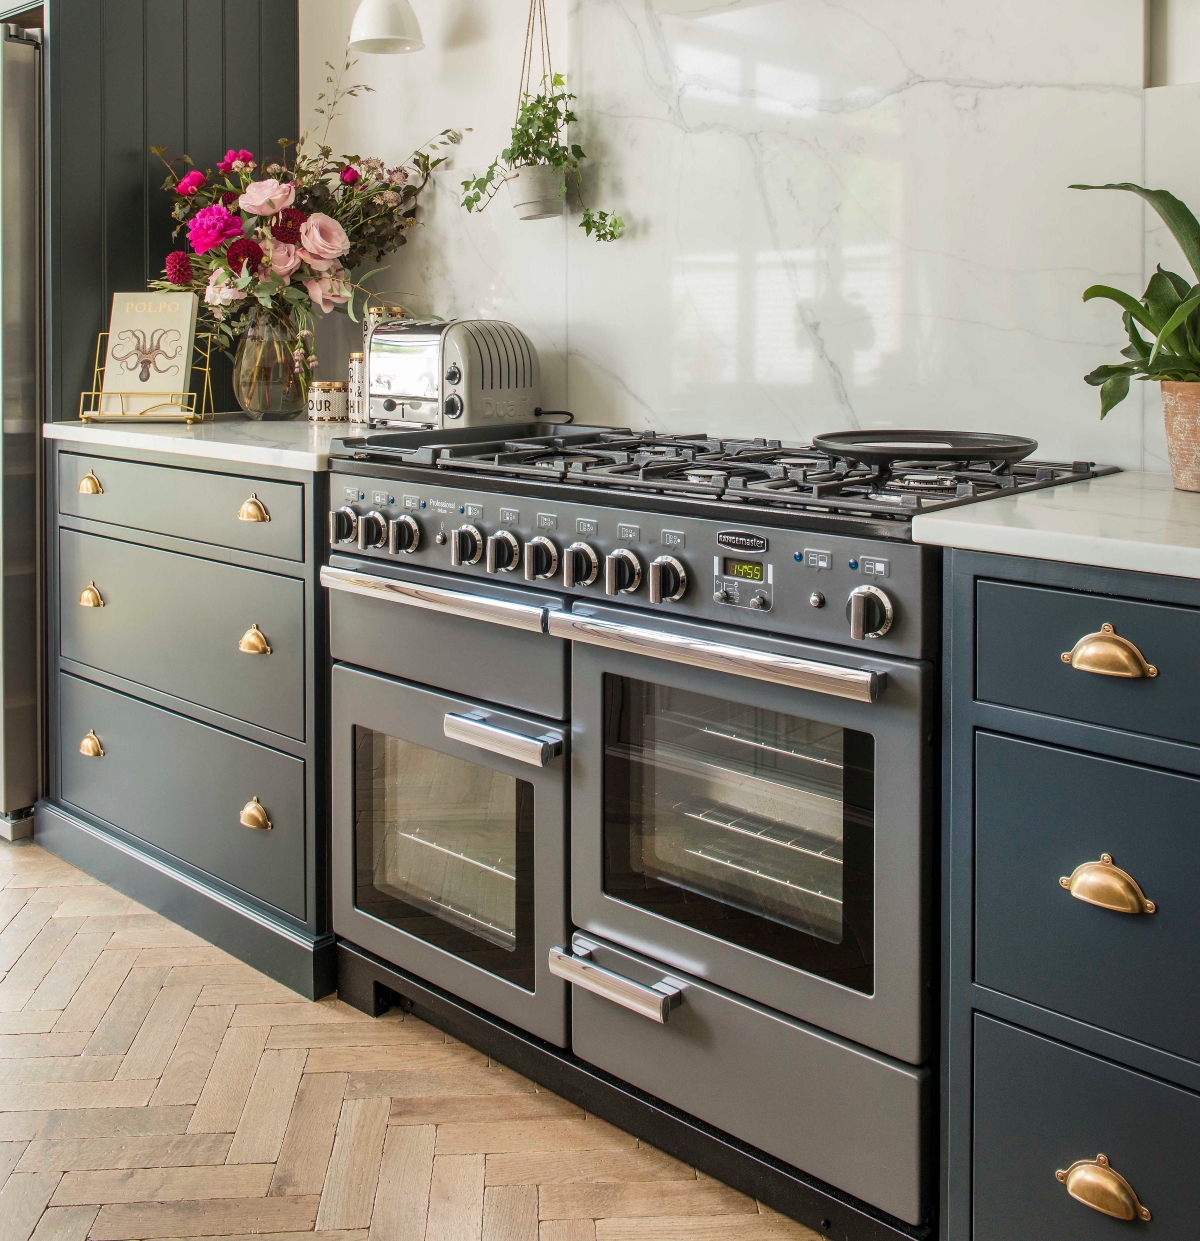 Horizontal oven in dark colored kitchen